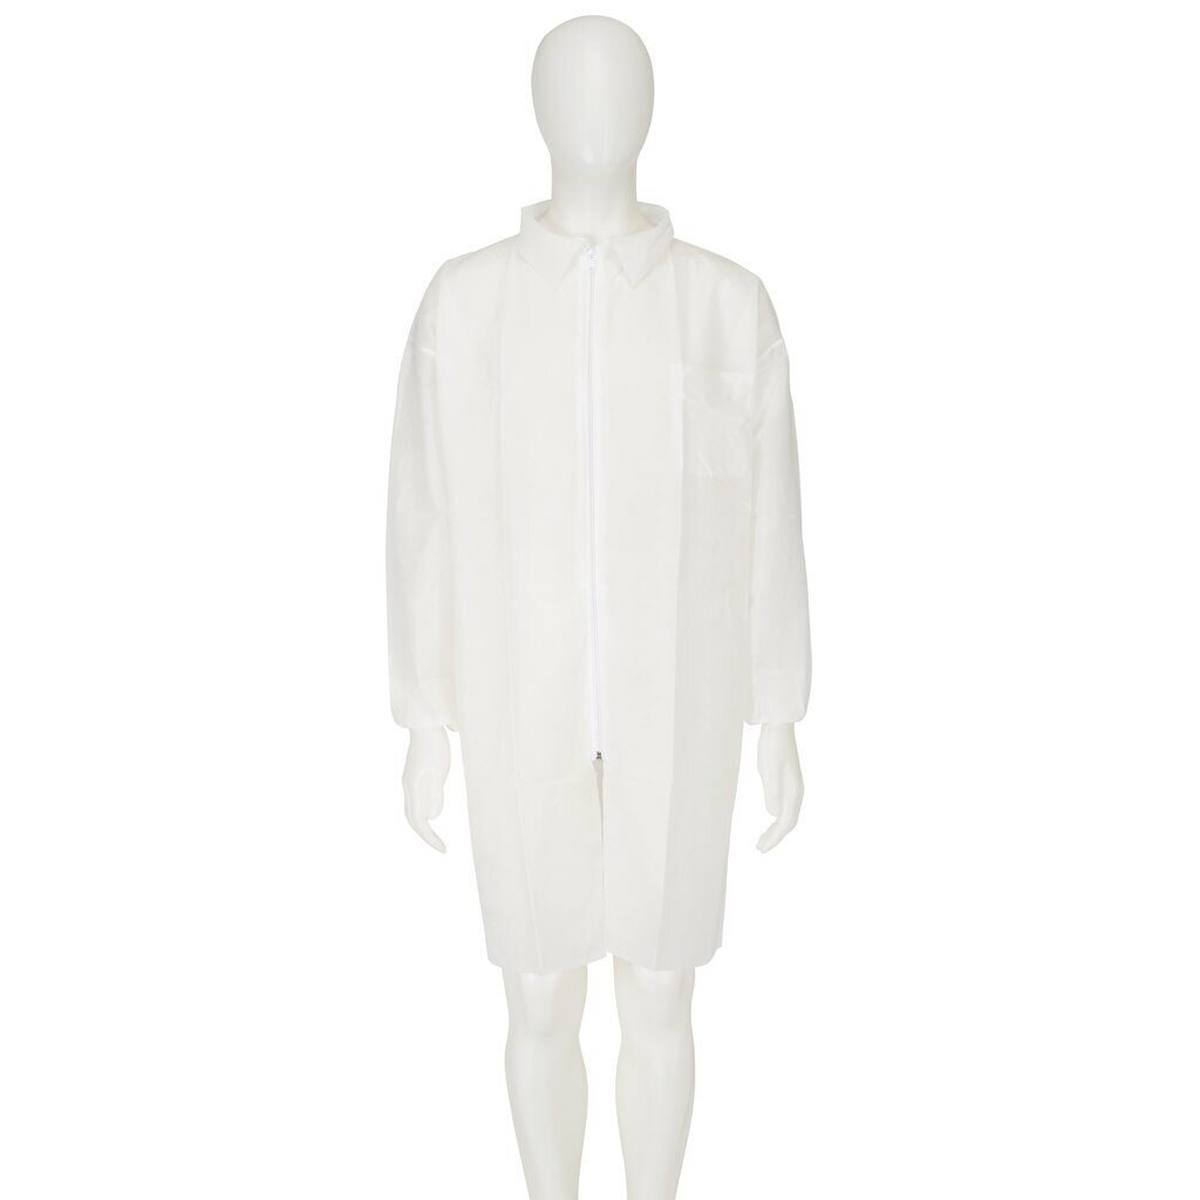 3M 4400 Abrigo, blanco, talla 4XL, material 100% polipropileno, transpirable, muy ligero, con cremallera